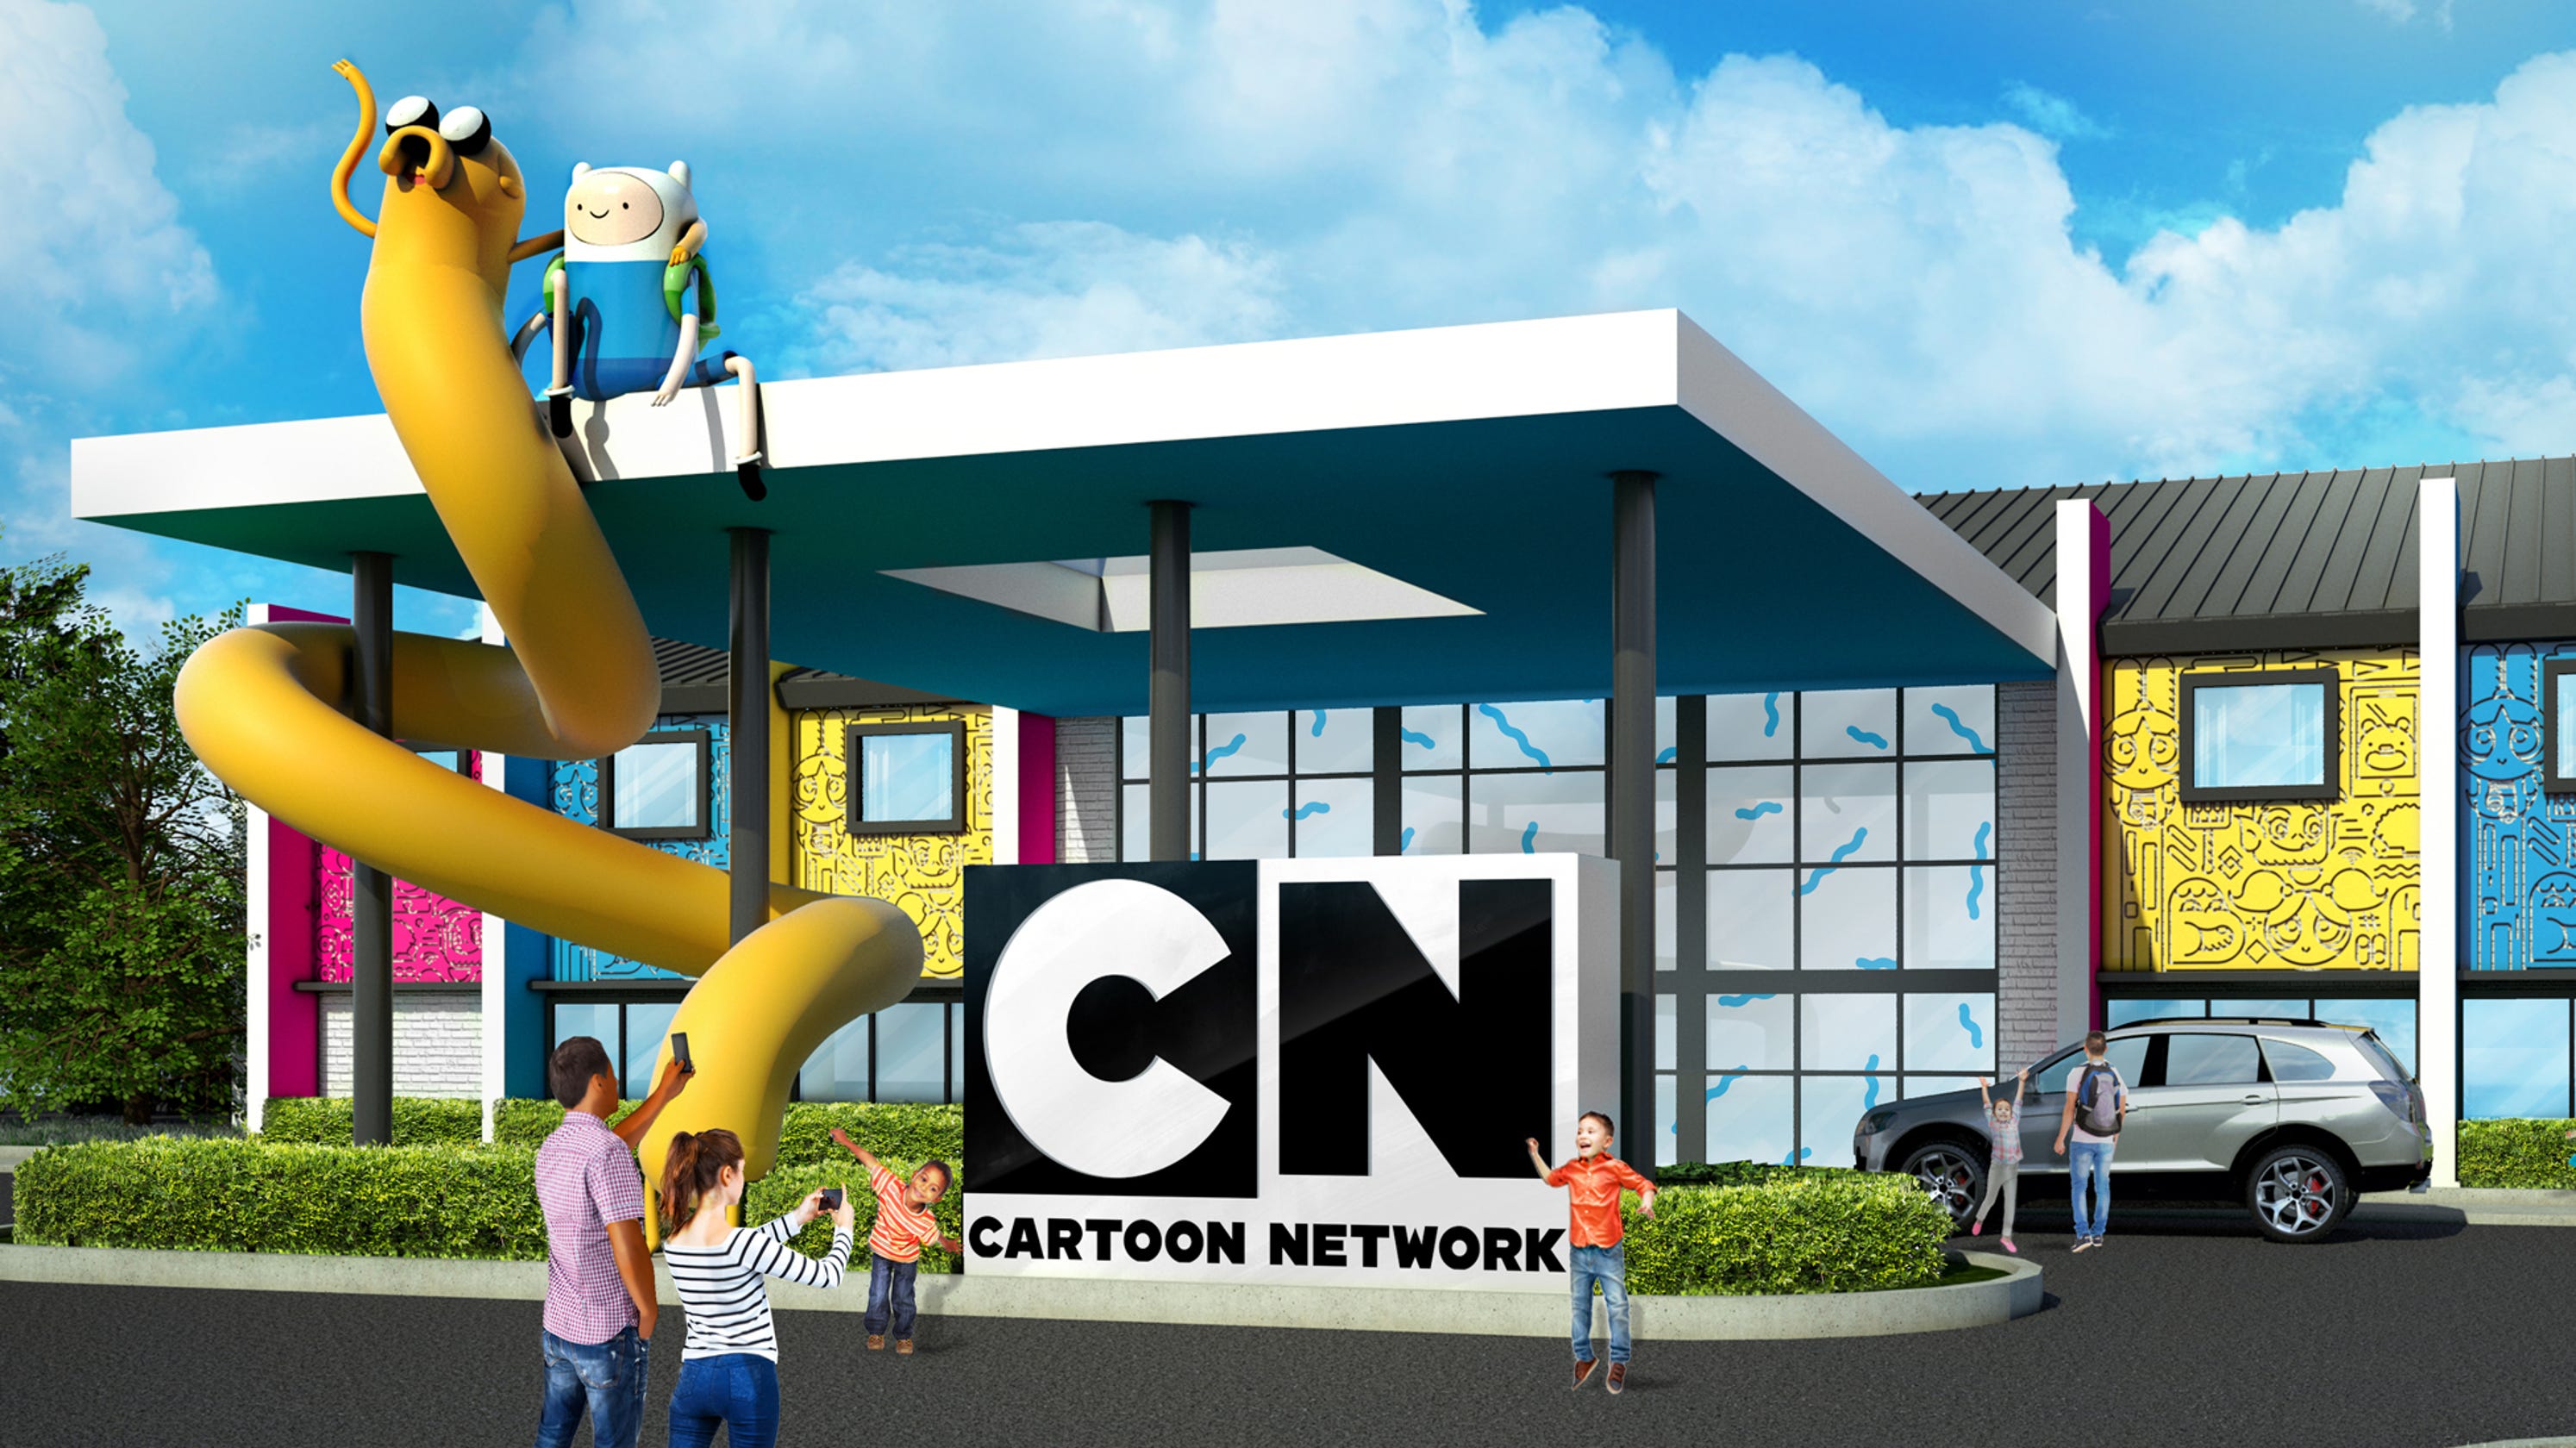 Cartoon Network Hotel to open in Pa. next to Dutch Wonderland in 2019